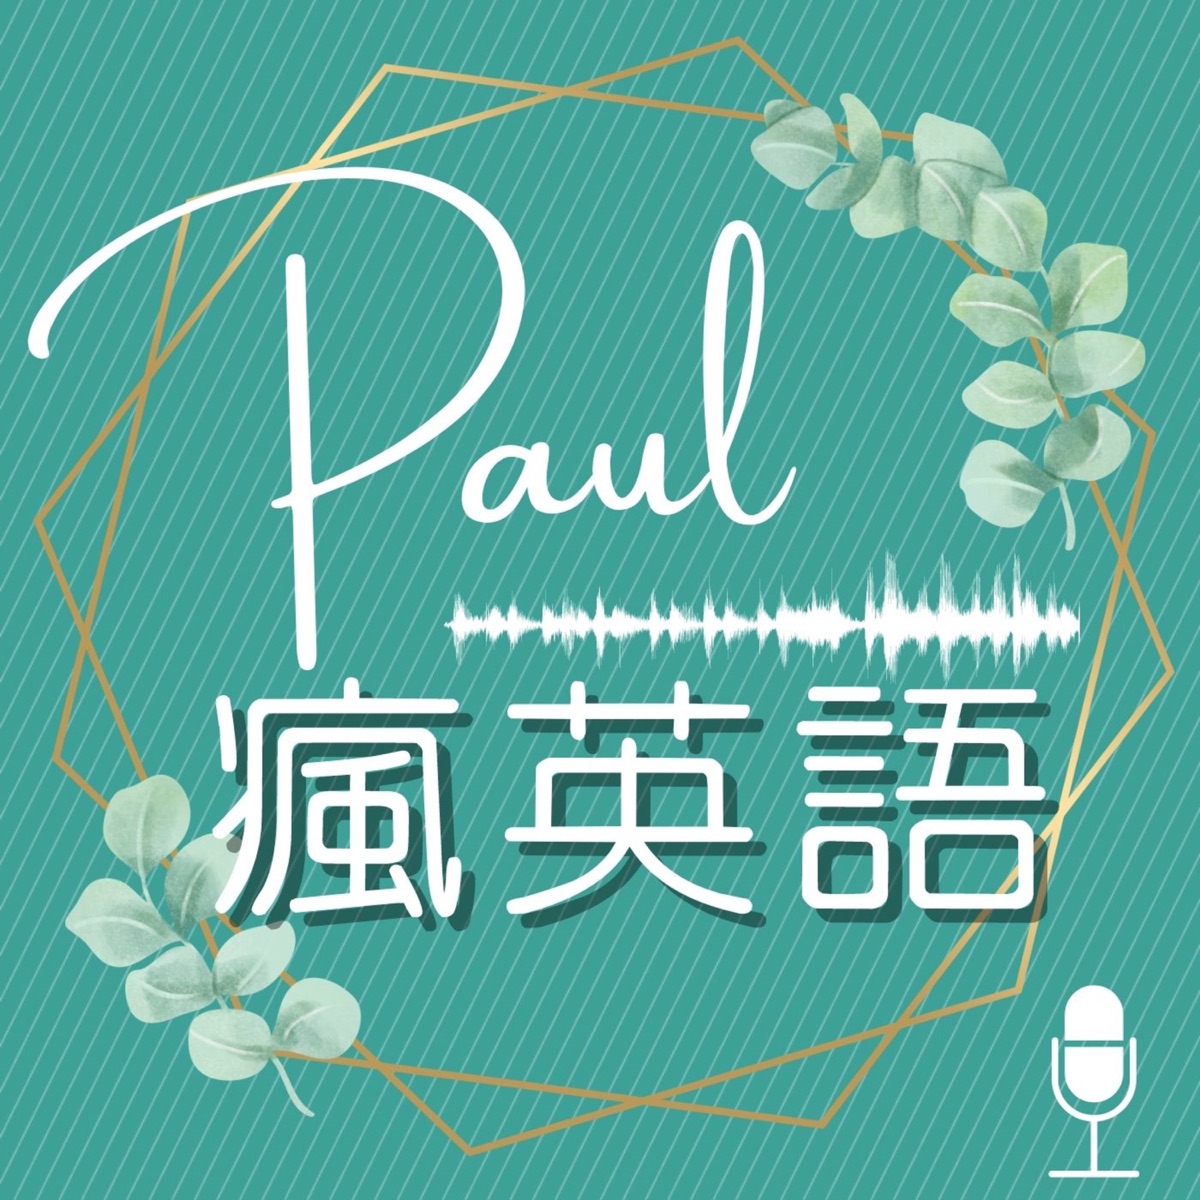 Paul 瘋英語 Podcast Podtail